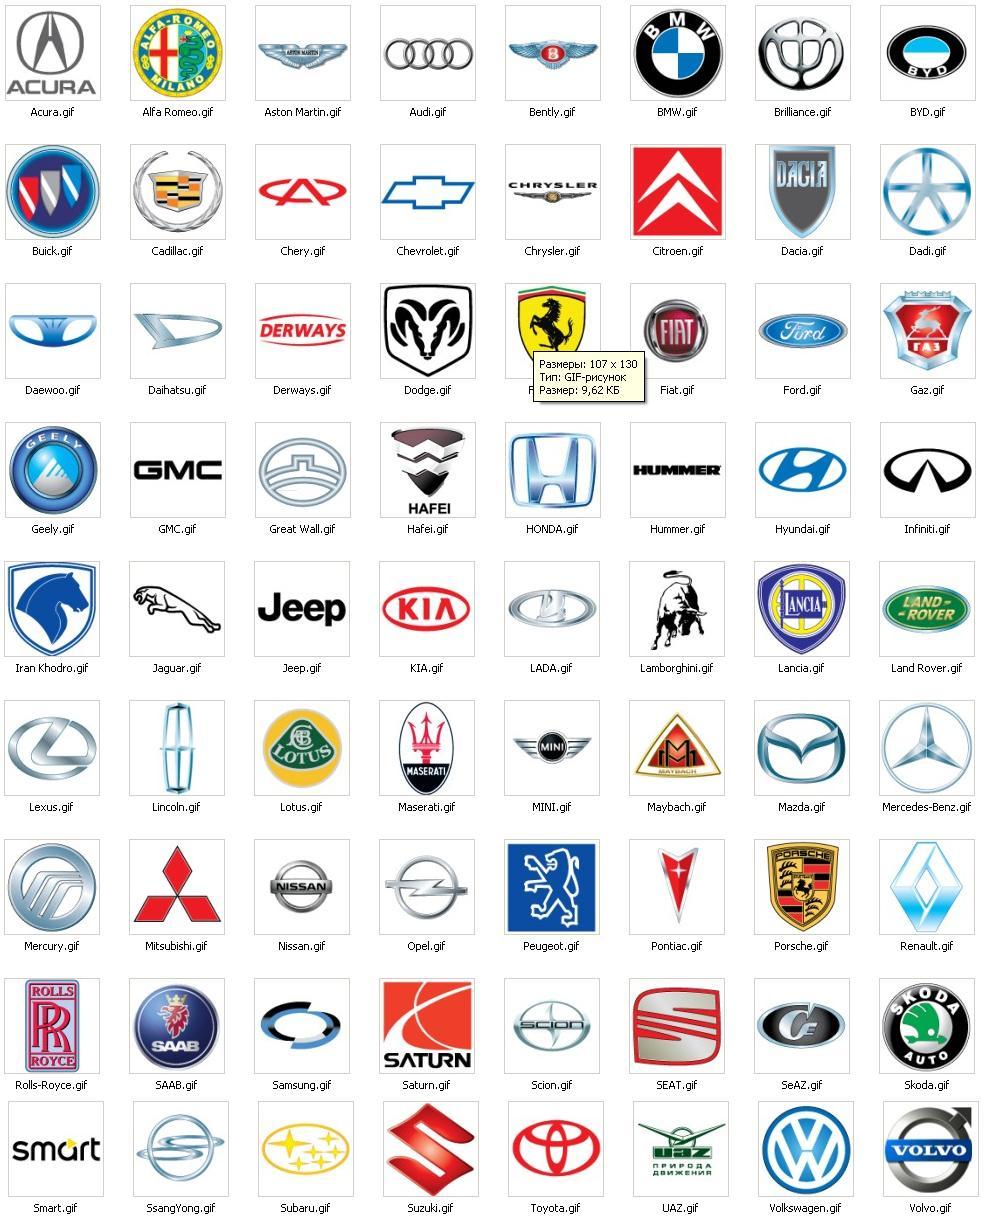 Buy Database modifications brands models of car + bonus photo and download